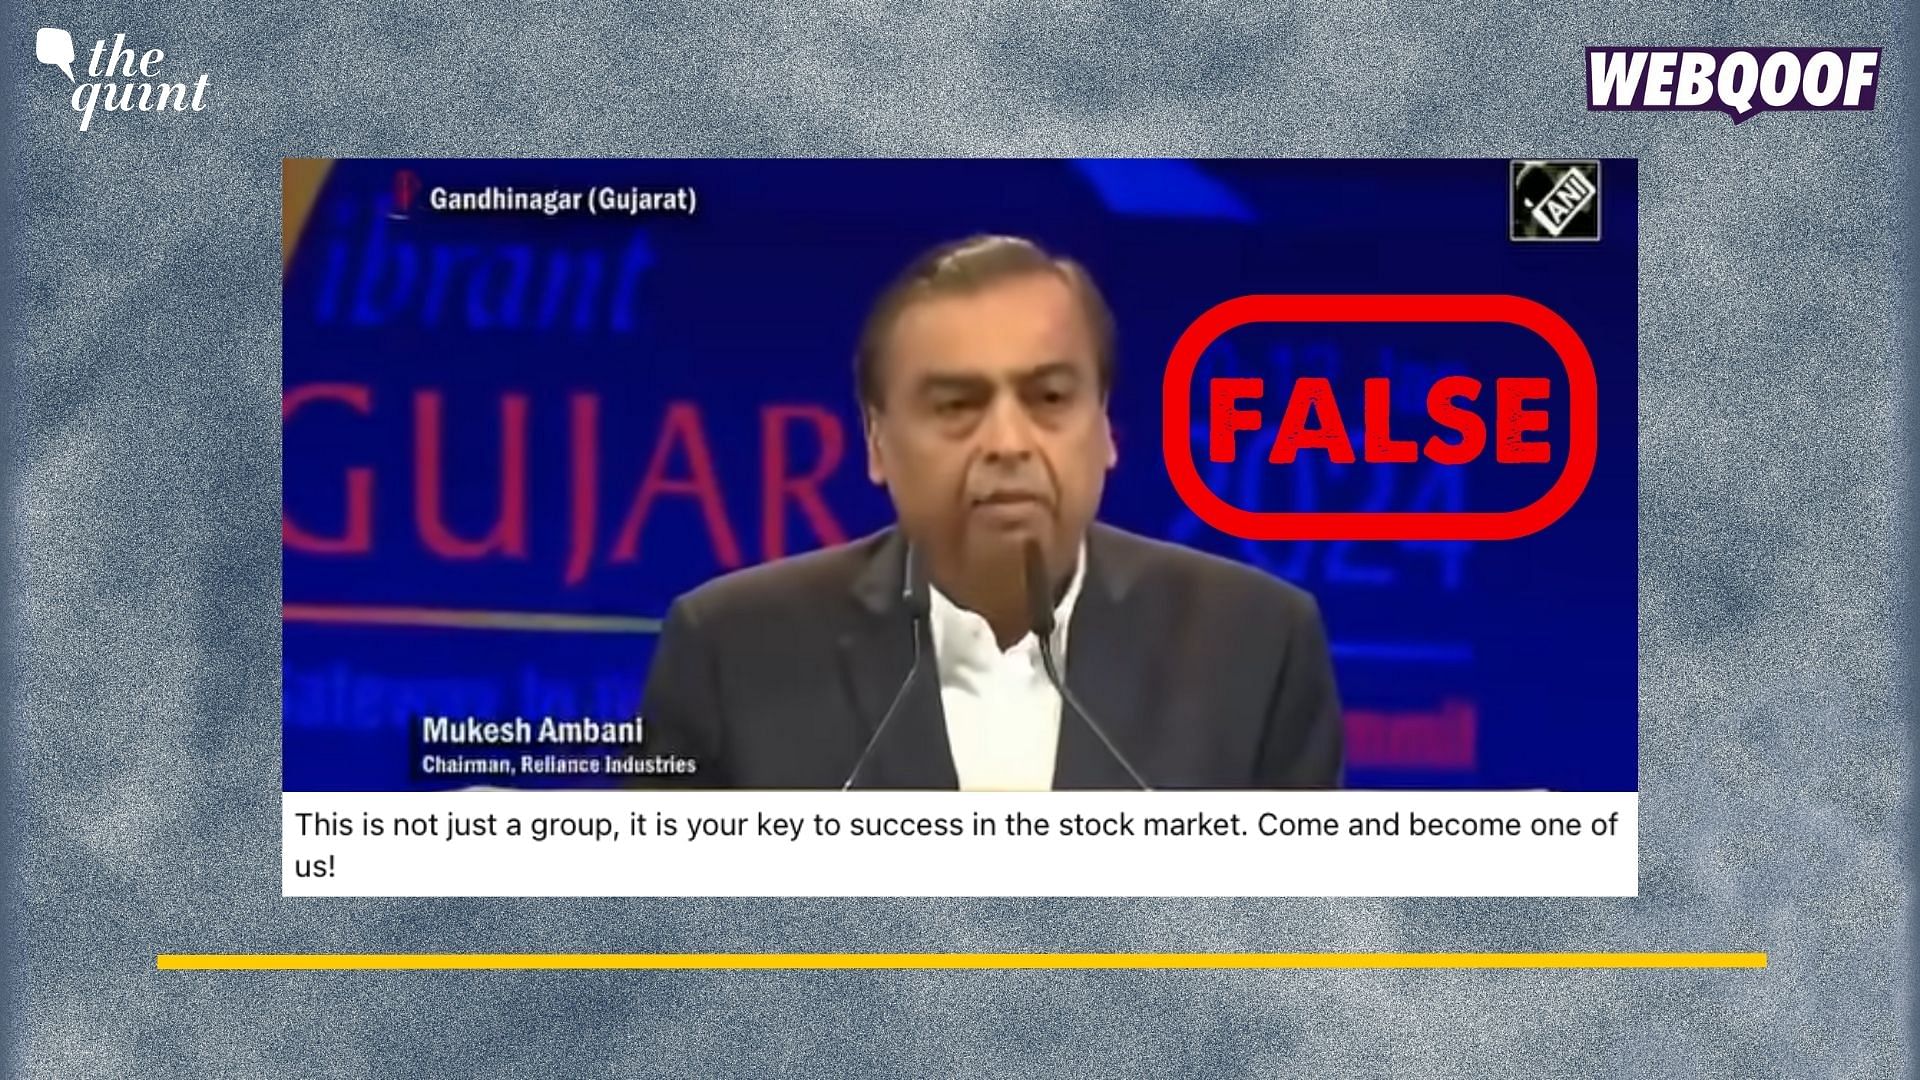 Video of Reliance Group Chairman Mukesh Ambani Promoting Stock Market Forum Is a Deepfake! [Video]